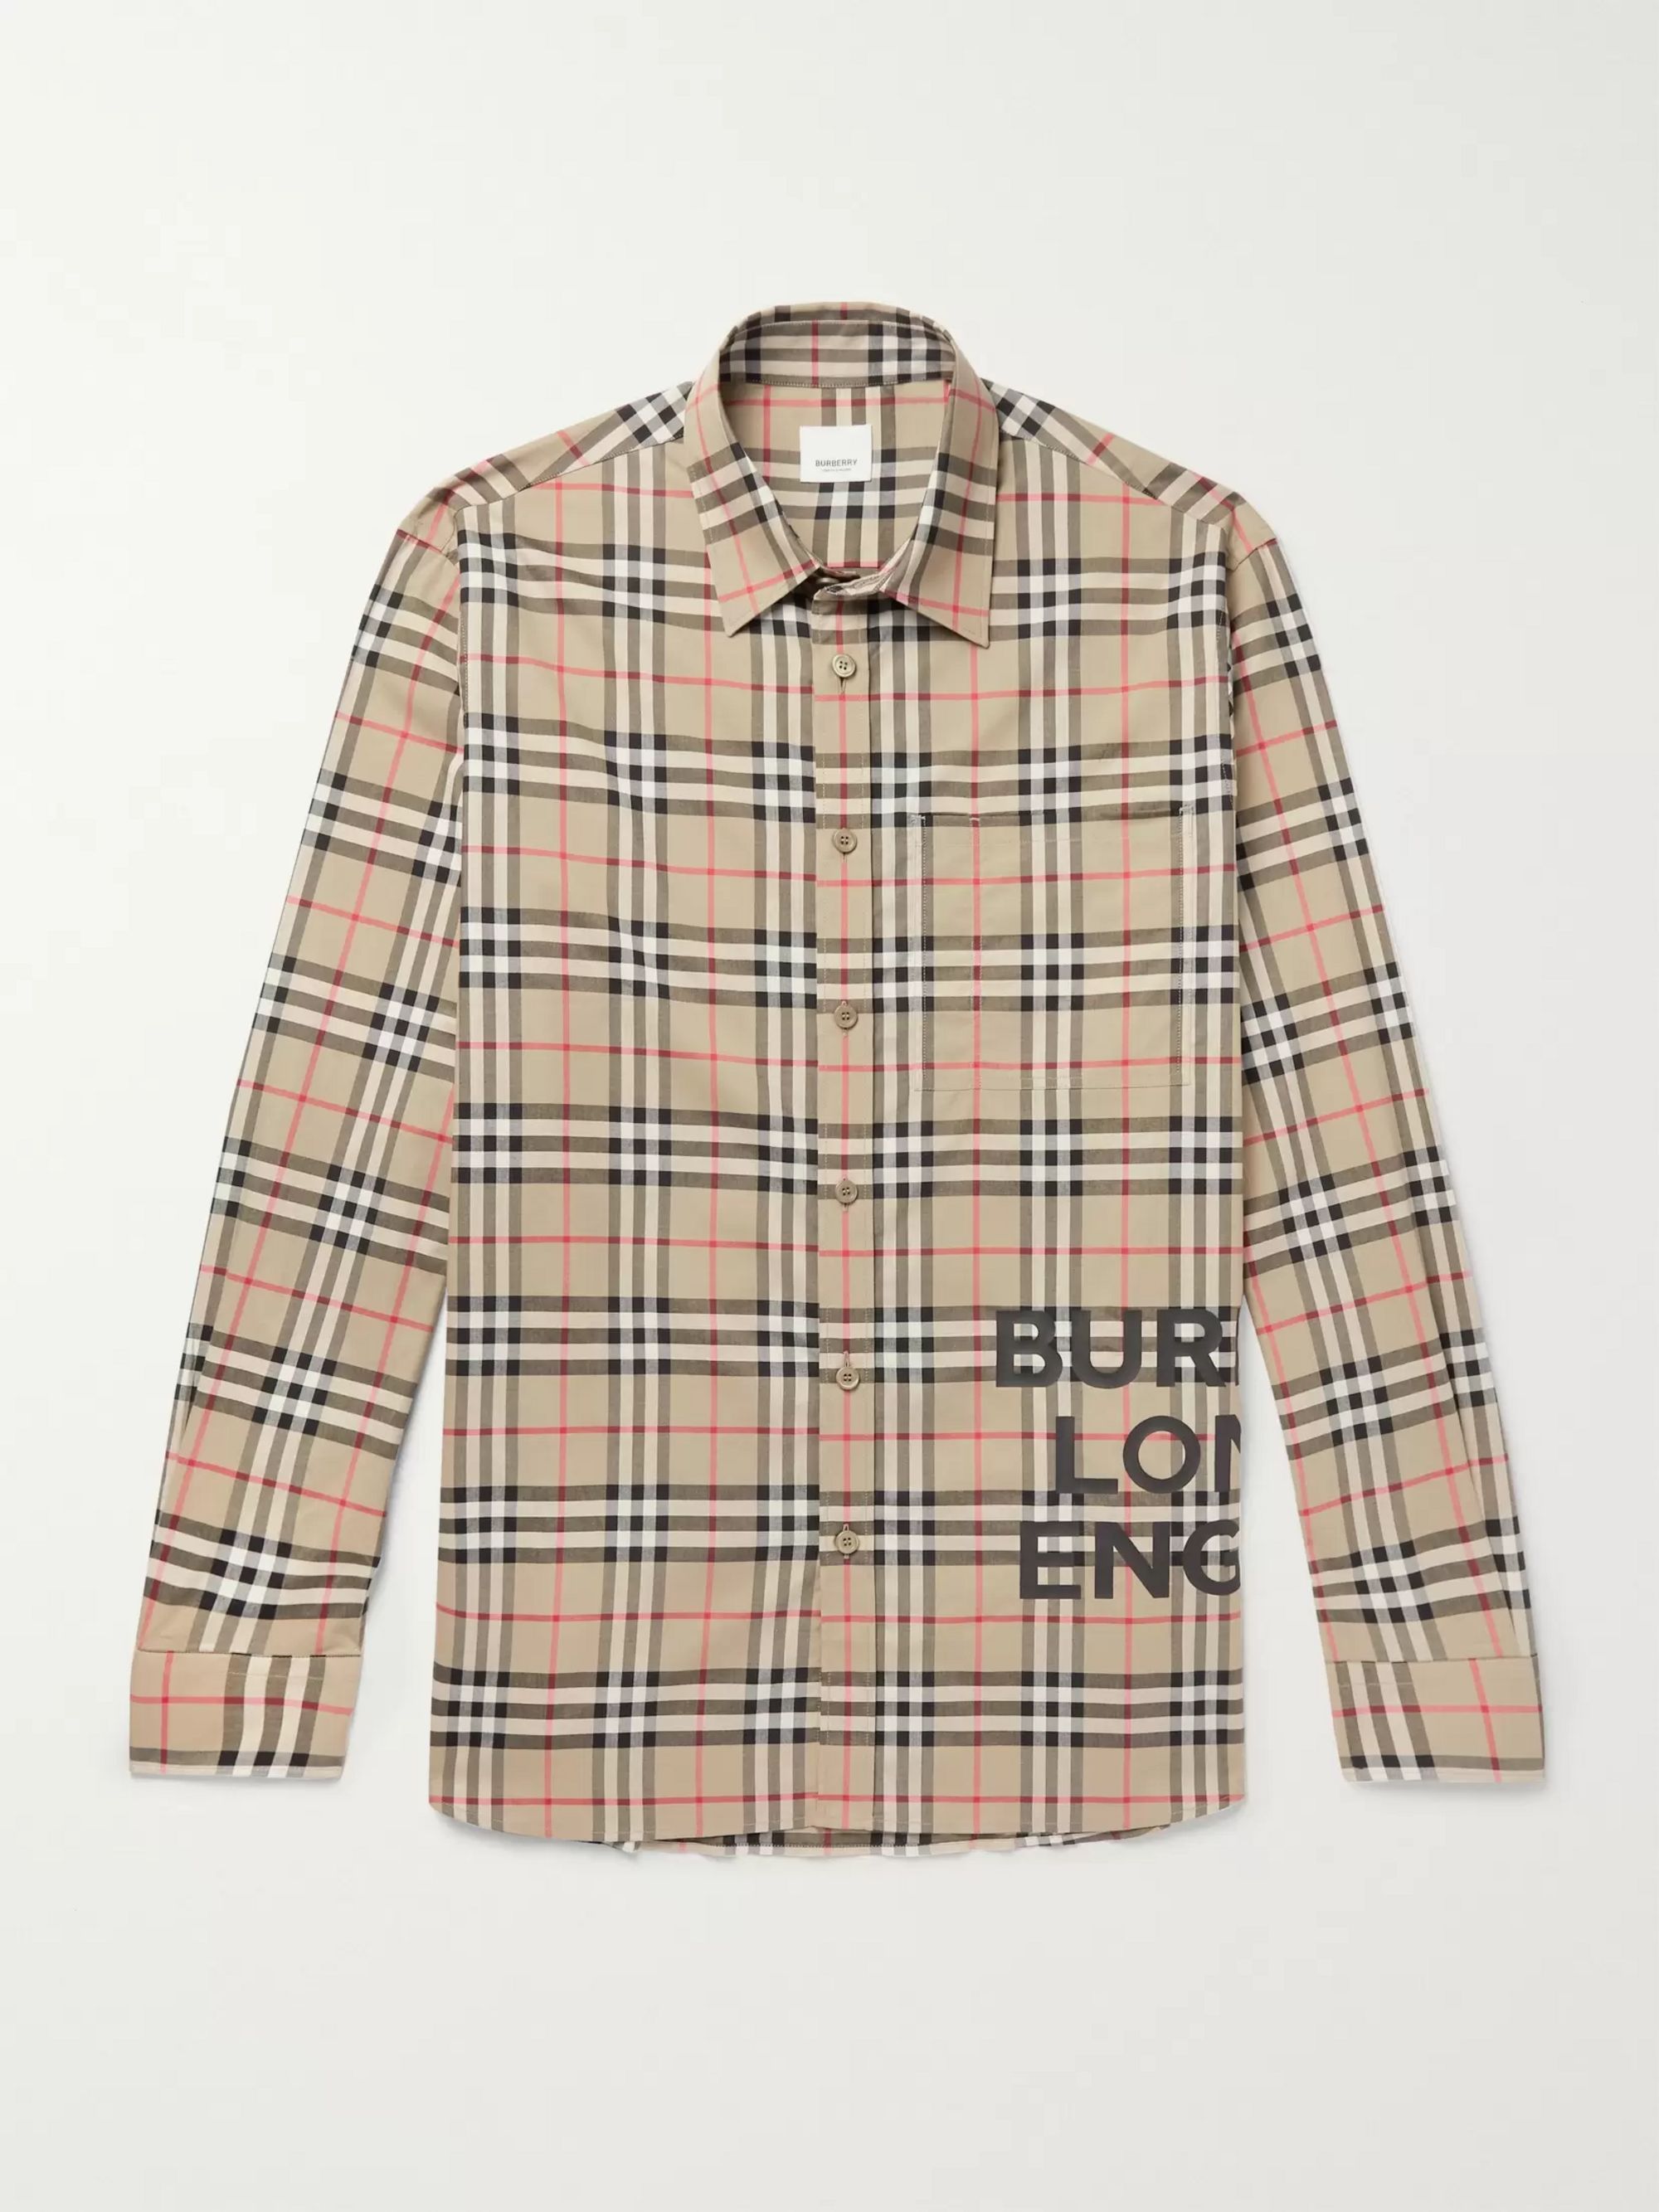 Burberry Check Shirt on Sale, 58% OFF | www.ingeniovirtual.com